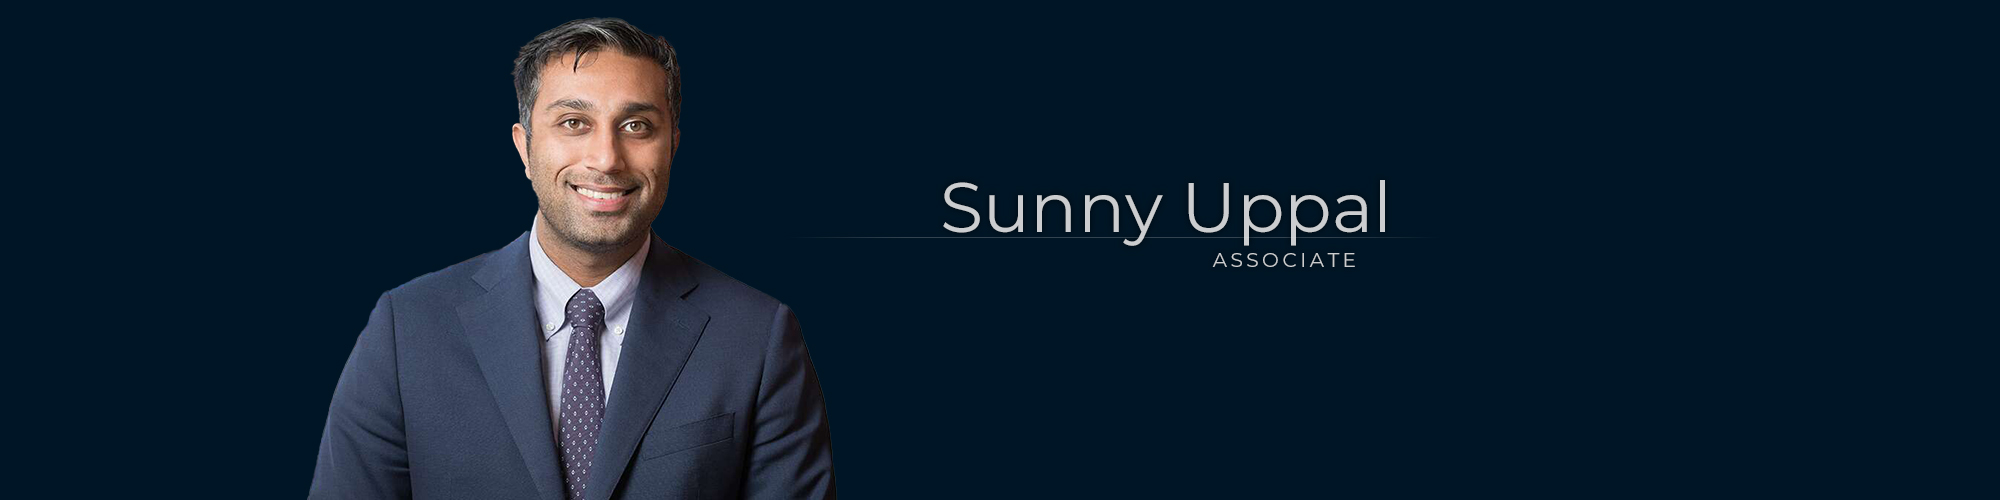 Sunny Uppal, Associate at Dominion GovLaw LLP